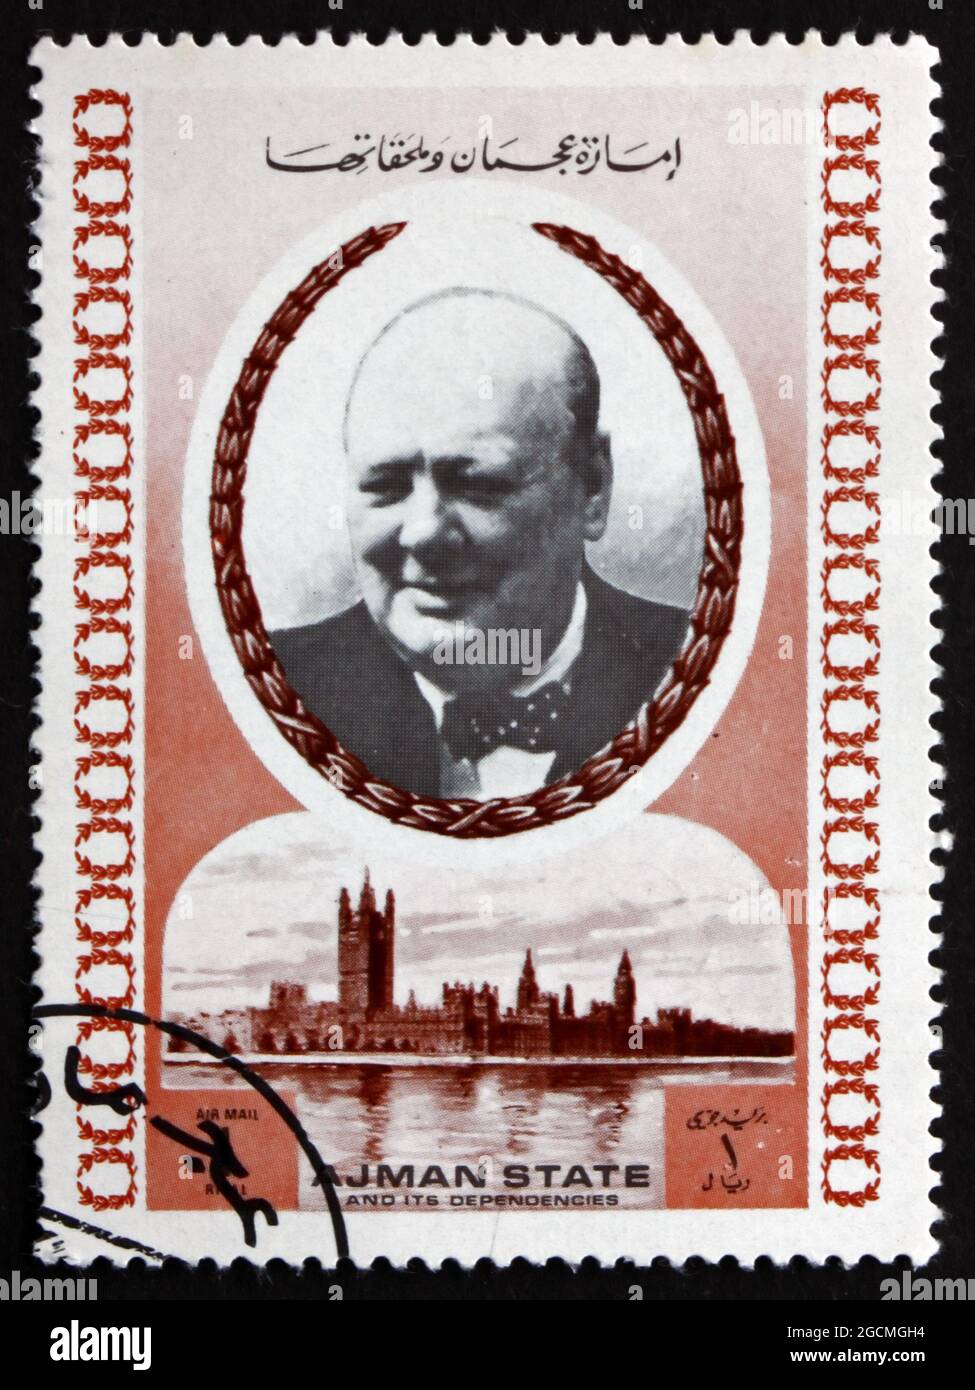 AJMAN - CIRCA 1972: a stamp printed in Ajman shows Winston Churchill, British Politician, Twice Prime Minister of the United Kingdom, circa 1972 Stock Photo